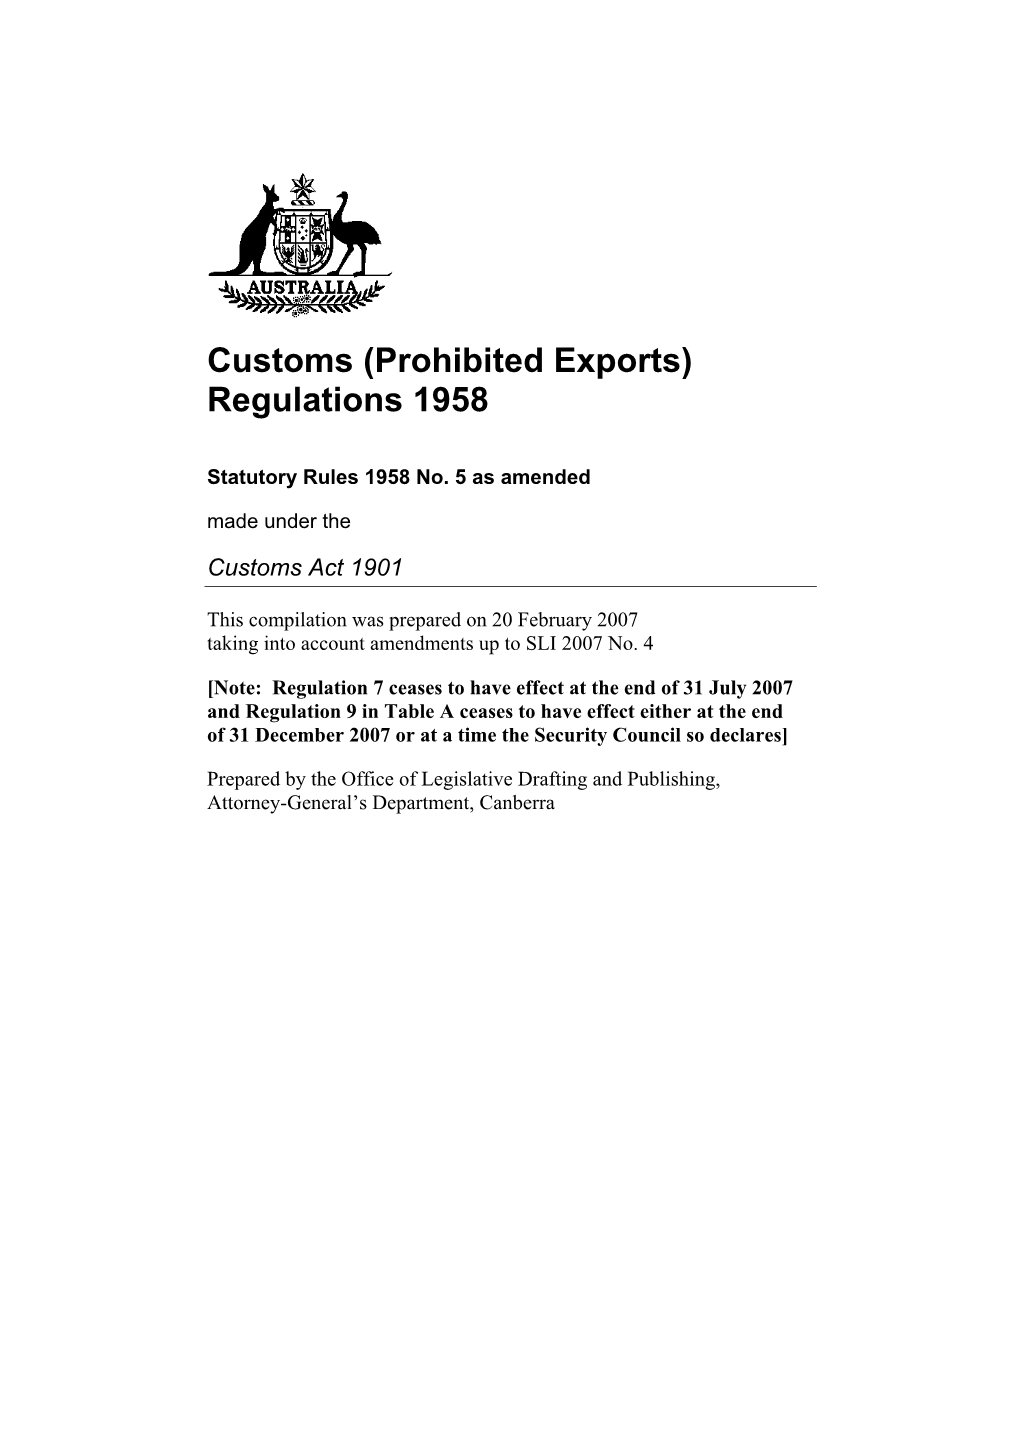 Customs (Prohibited Exports) Regulations 1958